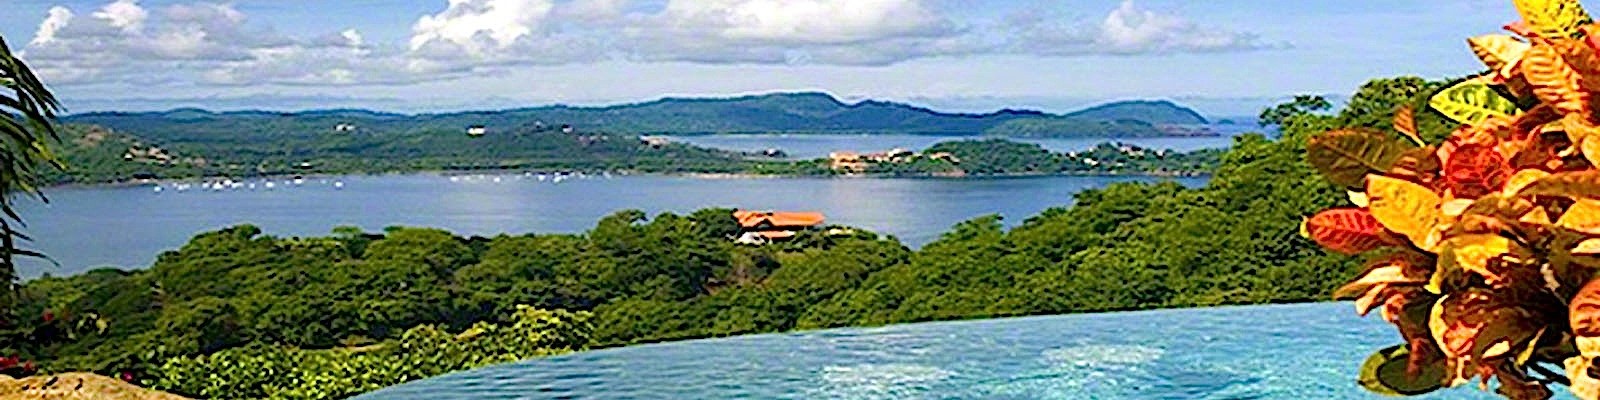 Costa Rica Real Estate Properties